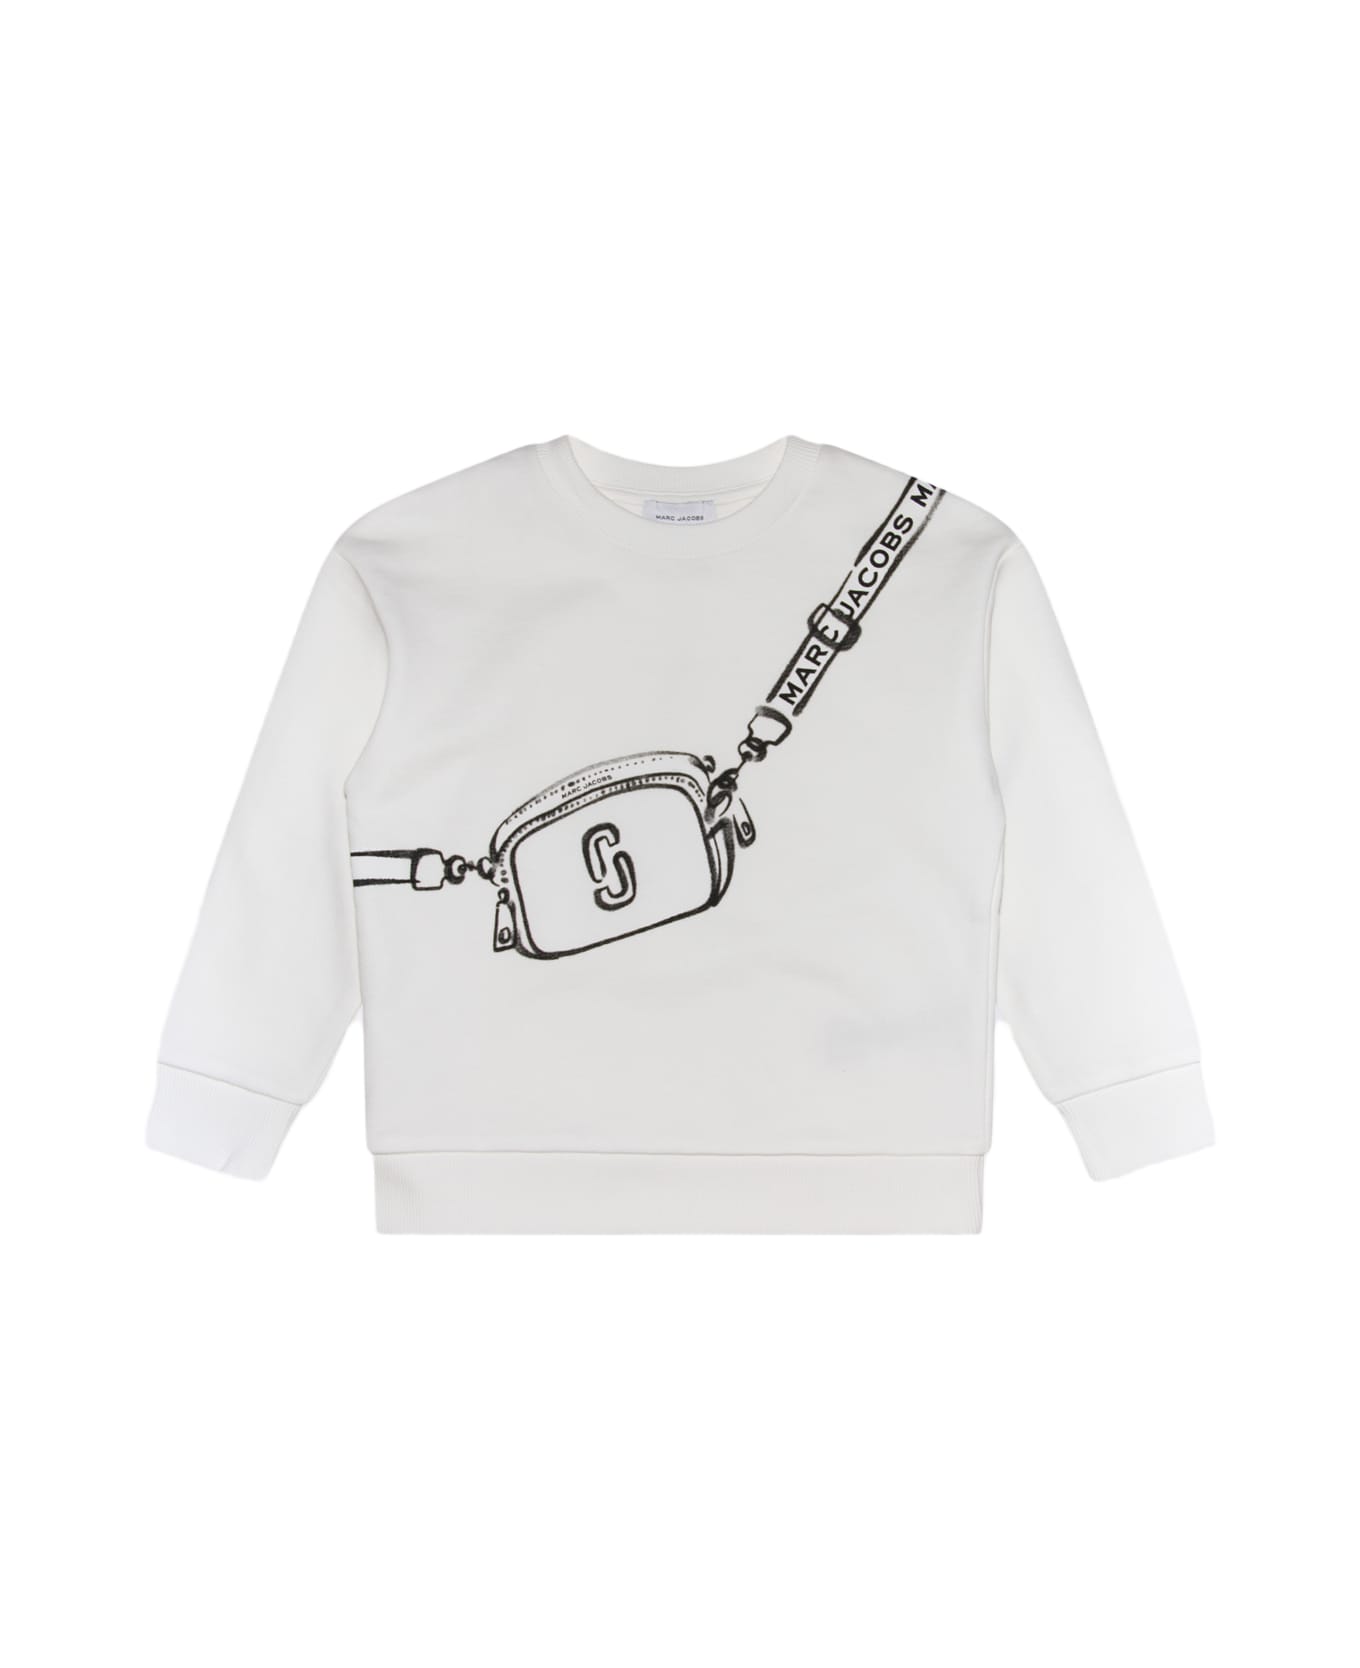 Marc Jacobs White And Black Cotton Sweatshirt - Ivory